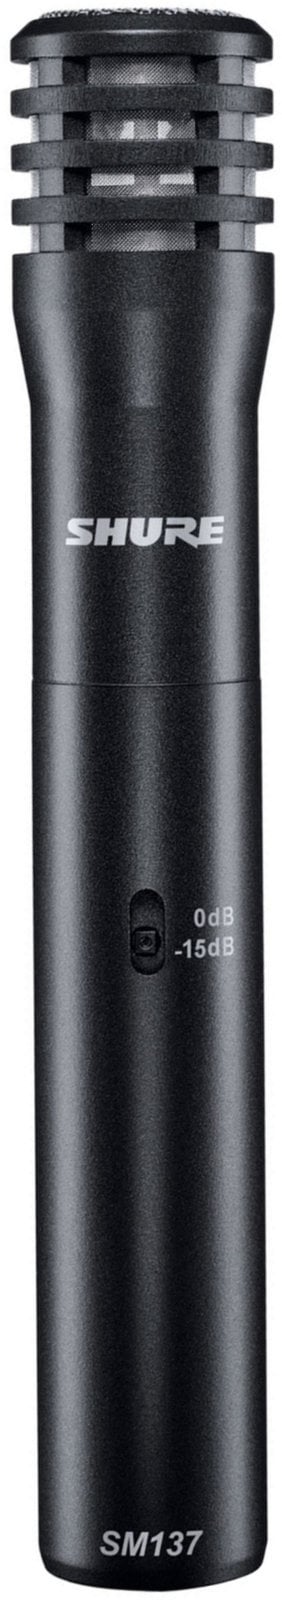 Kondensator Instrumentenmikrofon Shure SM137